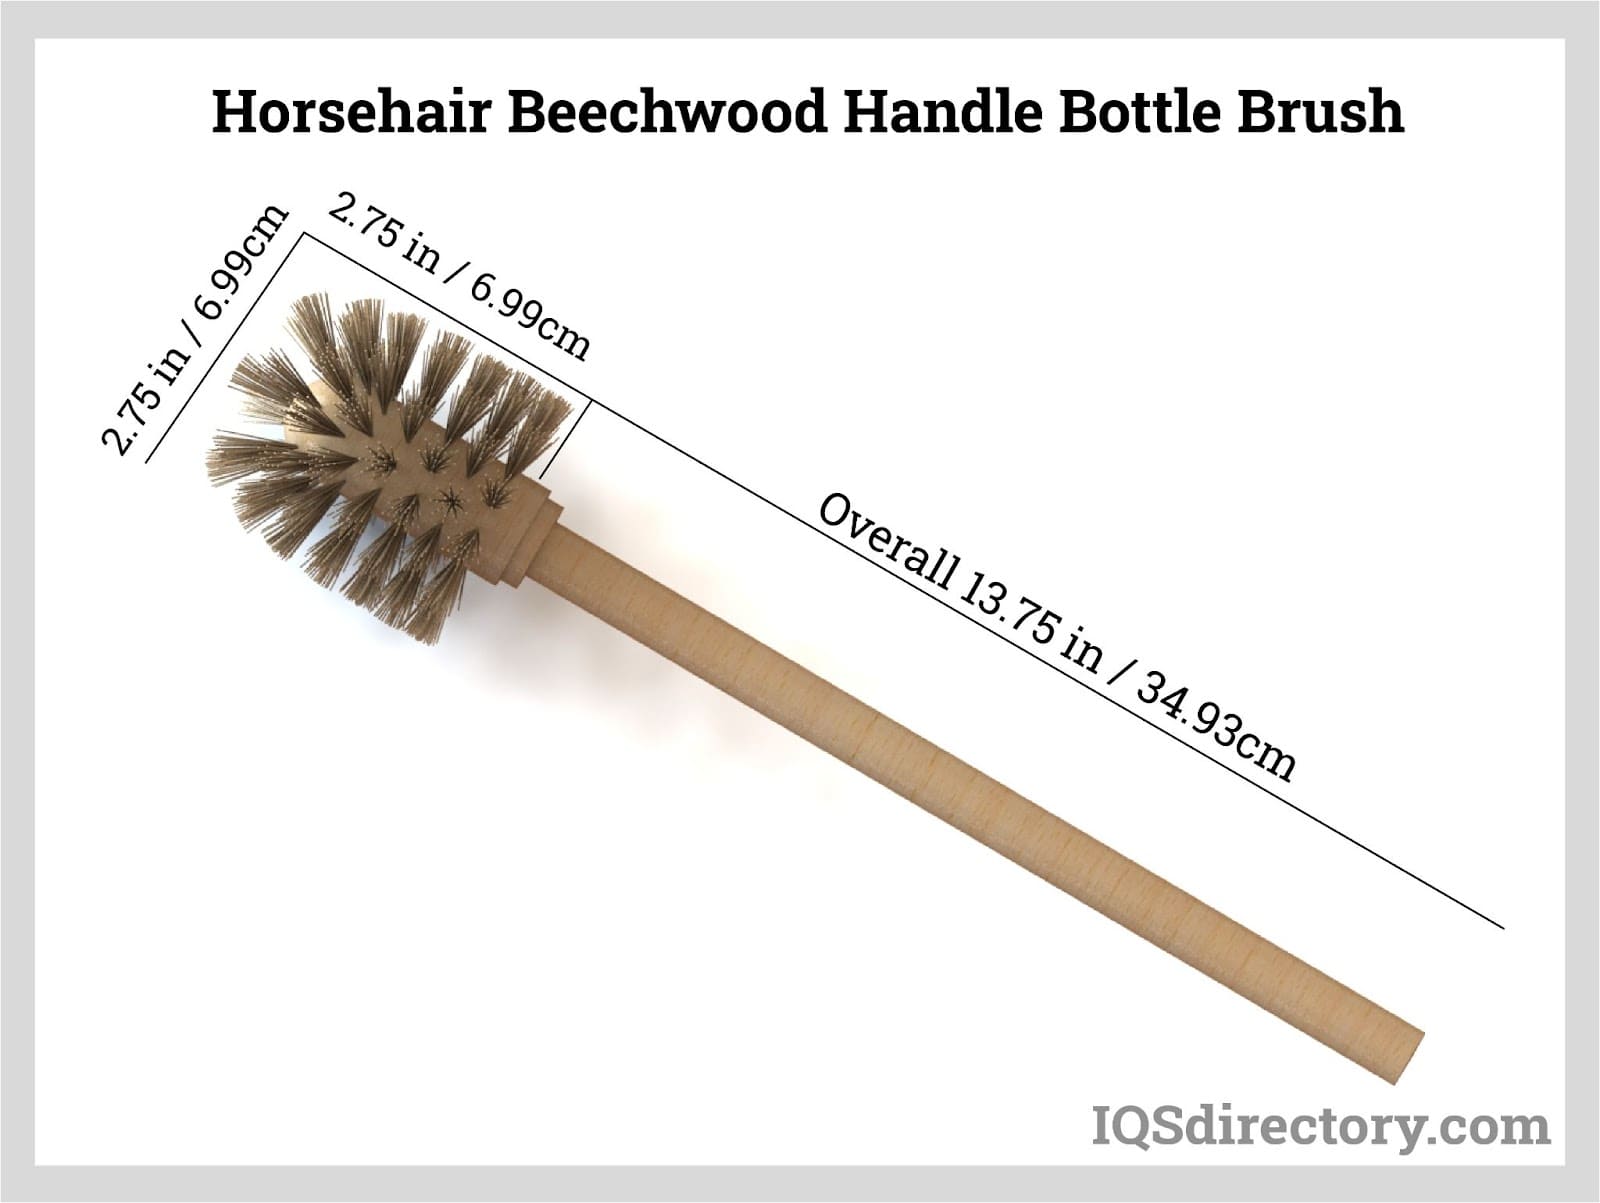 Horsehair Beechwood Handle Bottle Brush